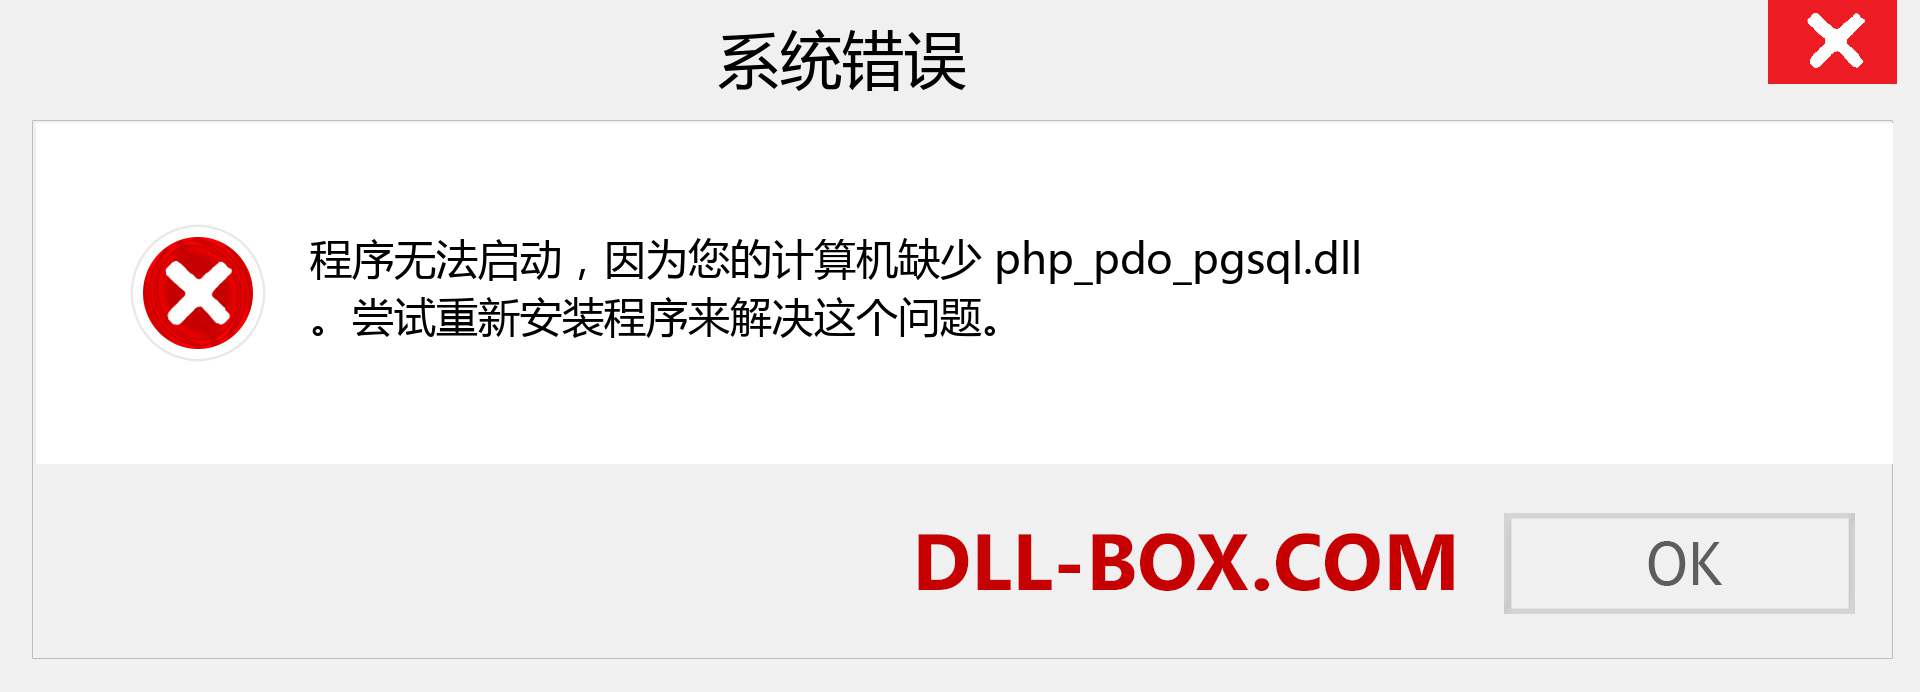 php_pdo_pgsql.dll 文件丢失？。 适用于 Windows 7、8、10 的下载 - 修复 Windows、照片、图像上的 php_pdo_pgsql dll 丢失错误